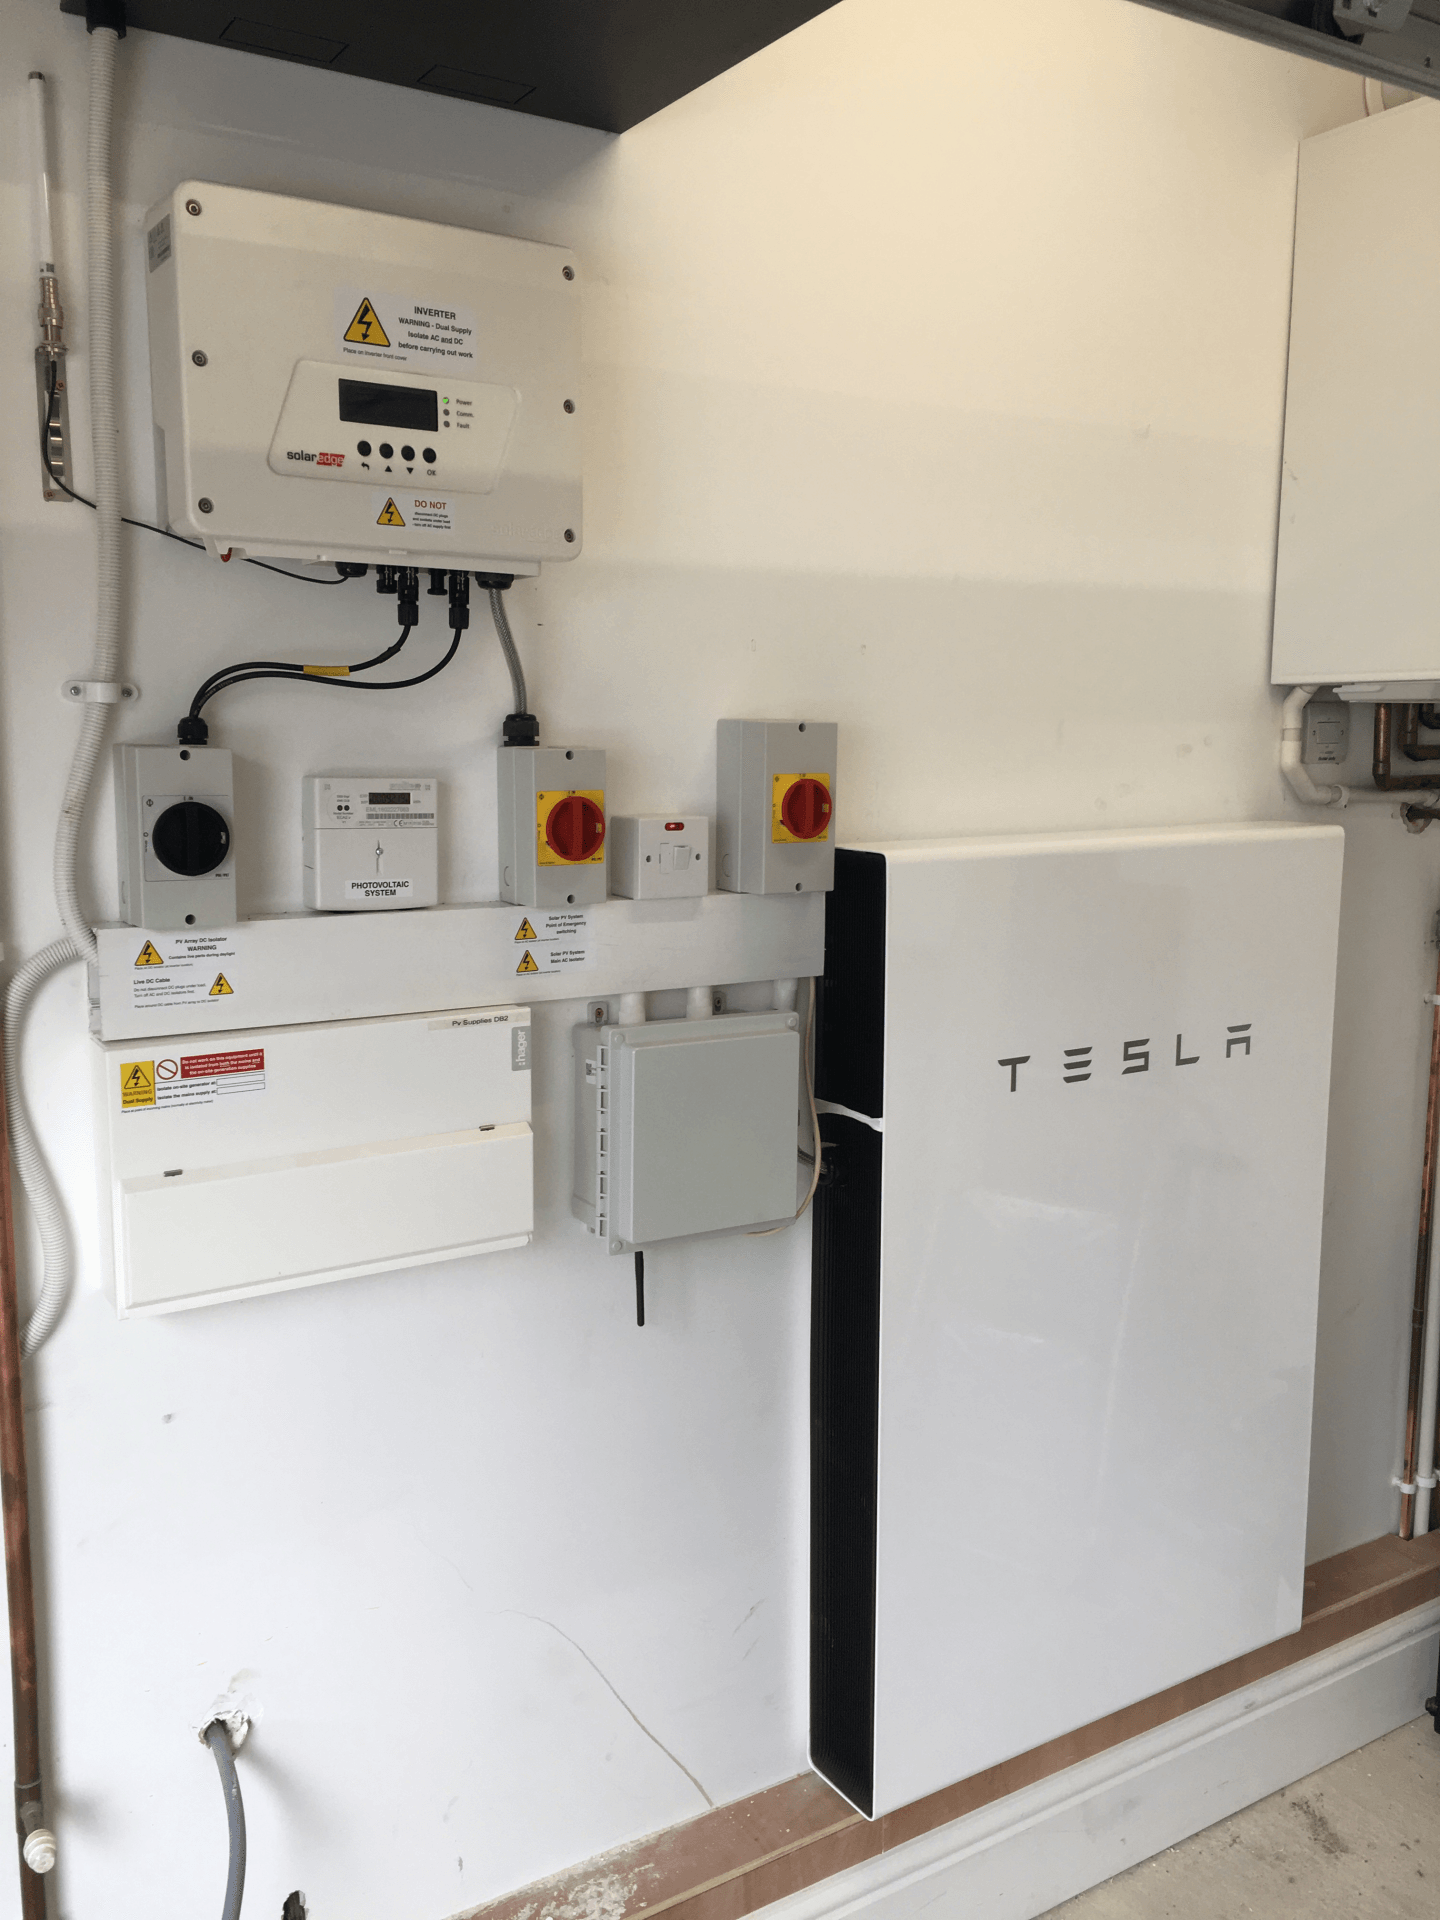 Tesla Powerwall system